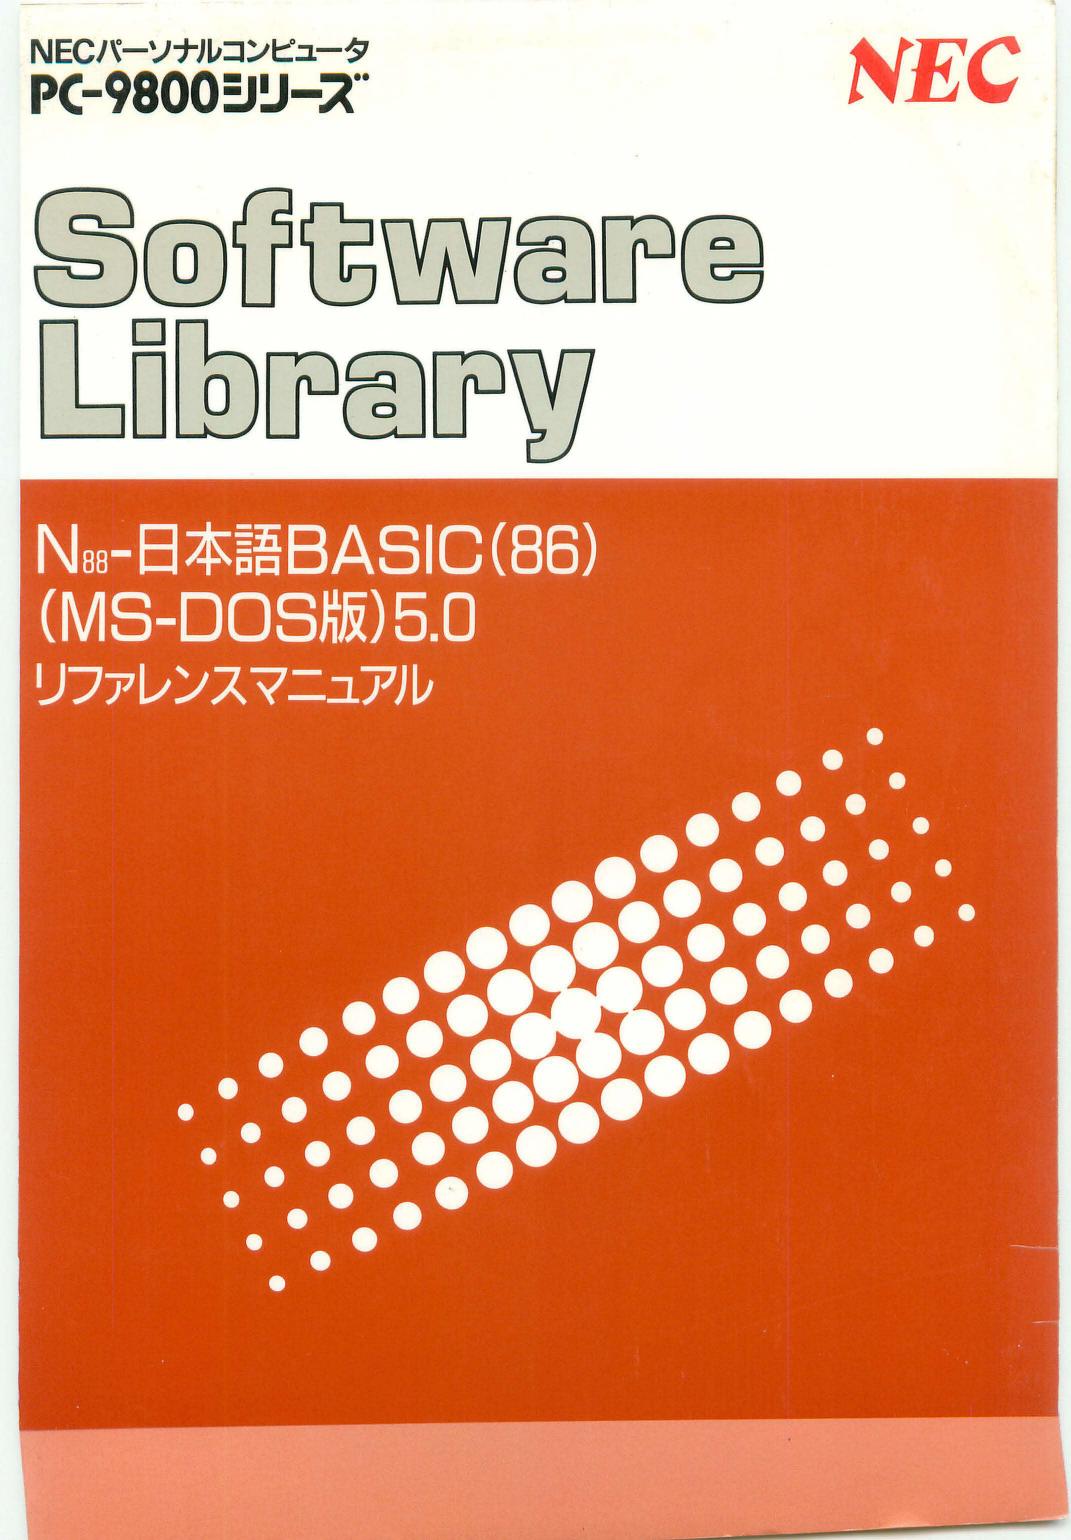 NEC PC-9800シリーズ N88-日本語BASIC(86) (MS-DOS版) 5.0 